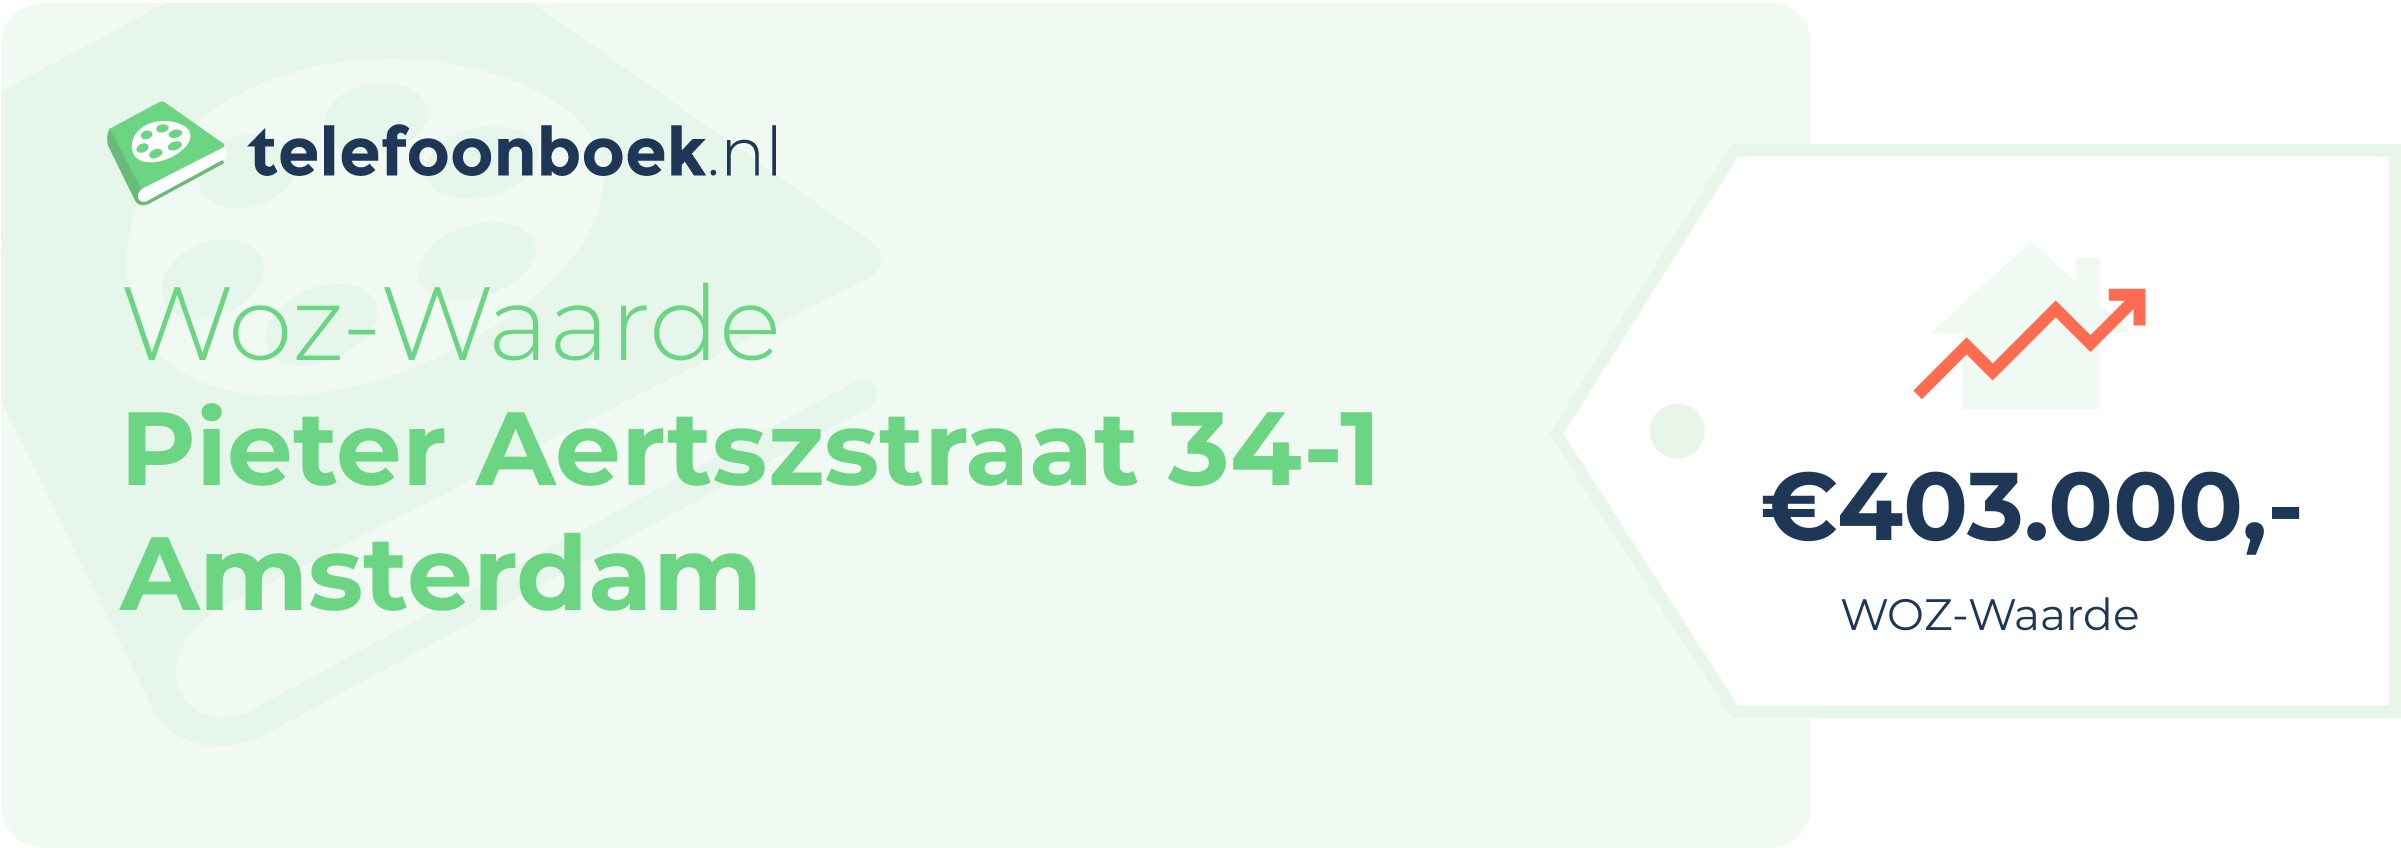 WOZ-waarde Pieter Aertszstraat 34-1 Amsterdam